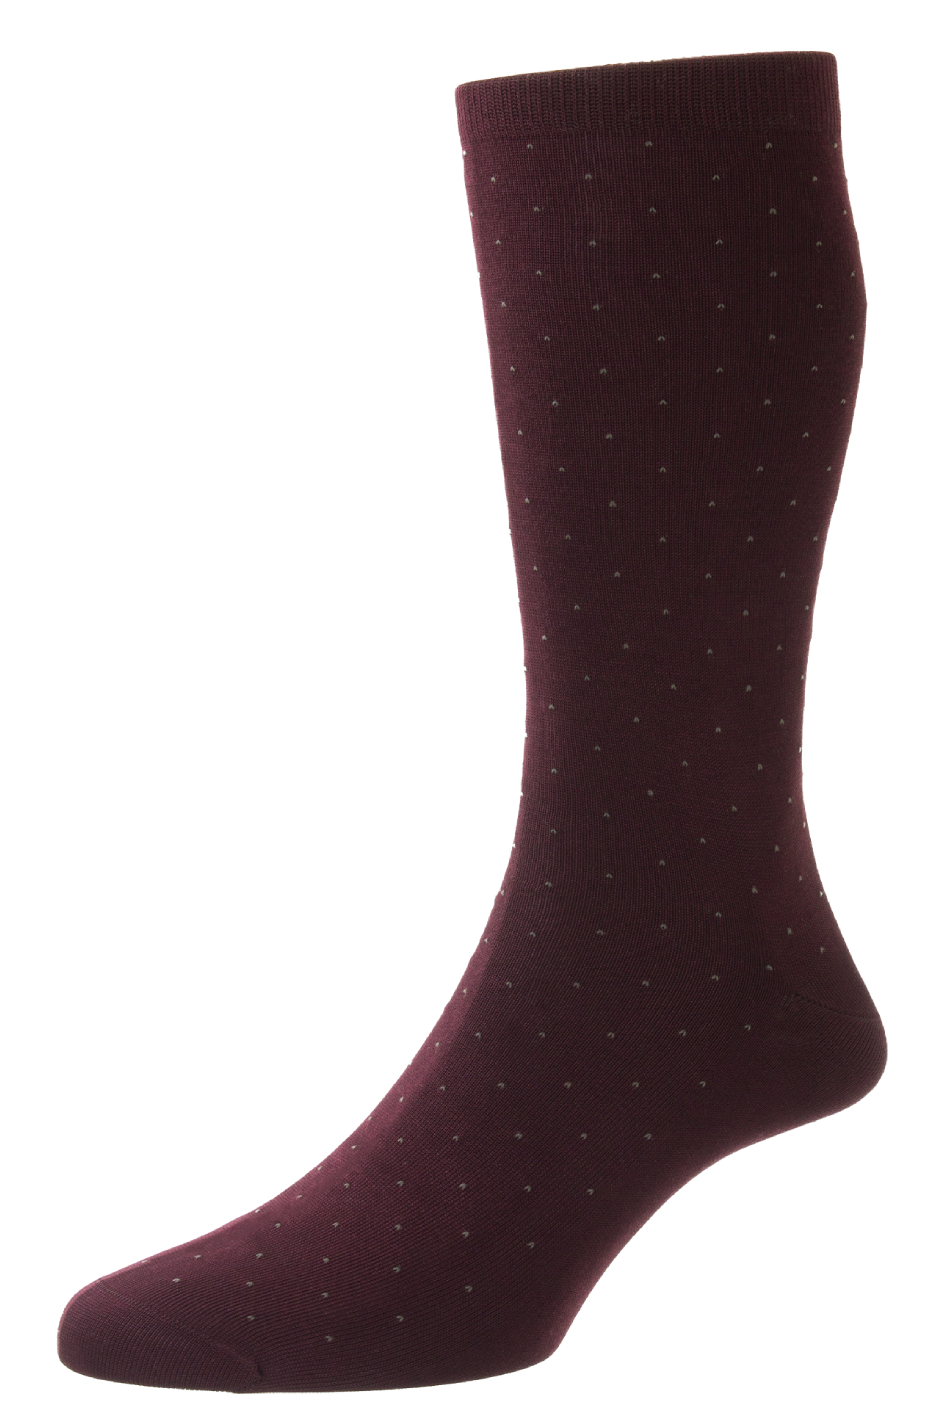 Pantherella Men's Gadsbury Pindot Sock